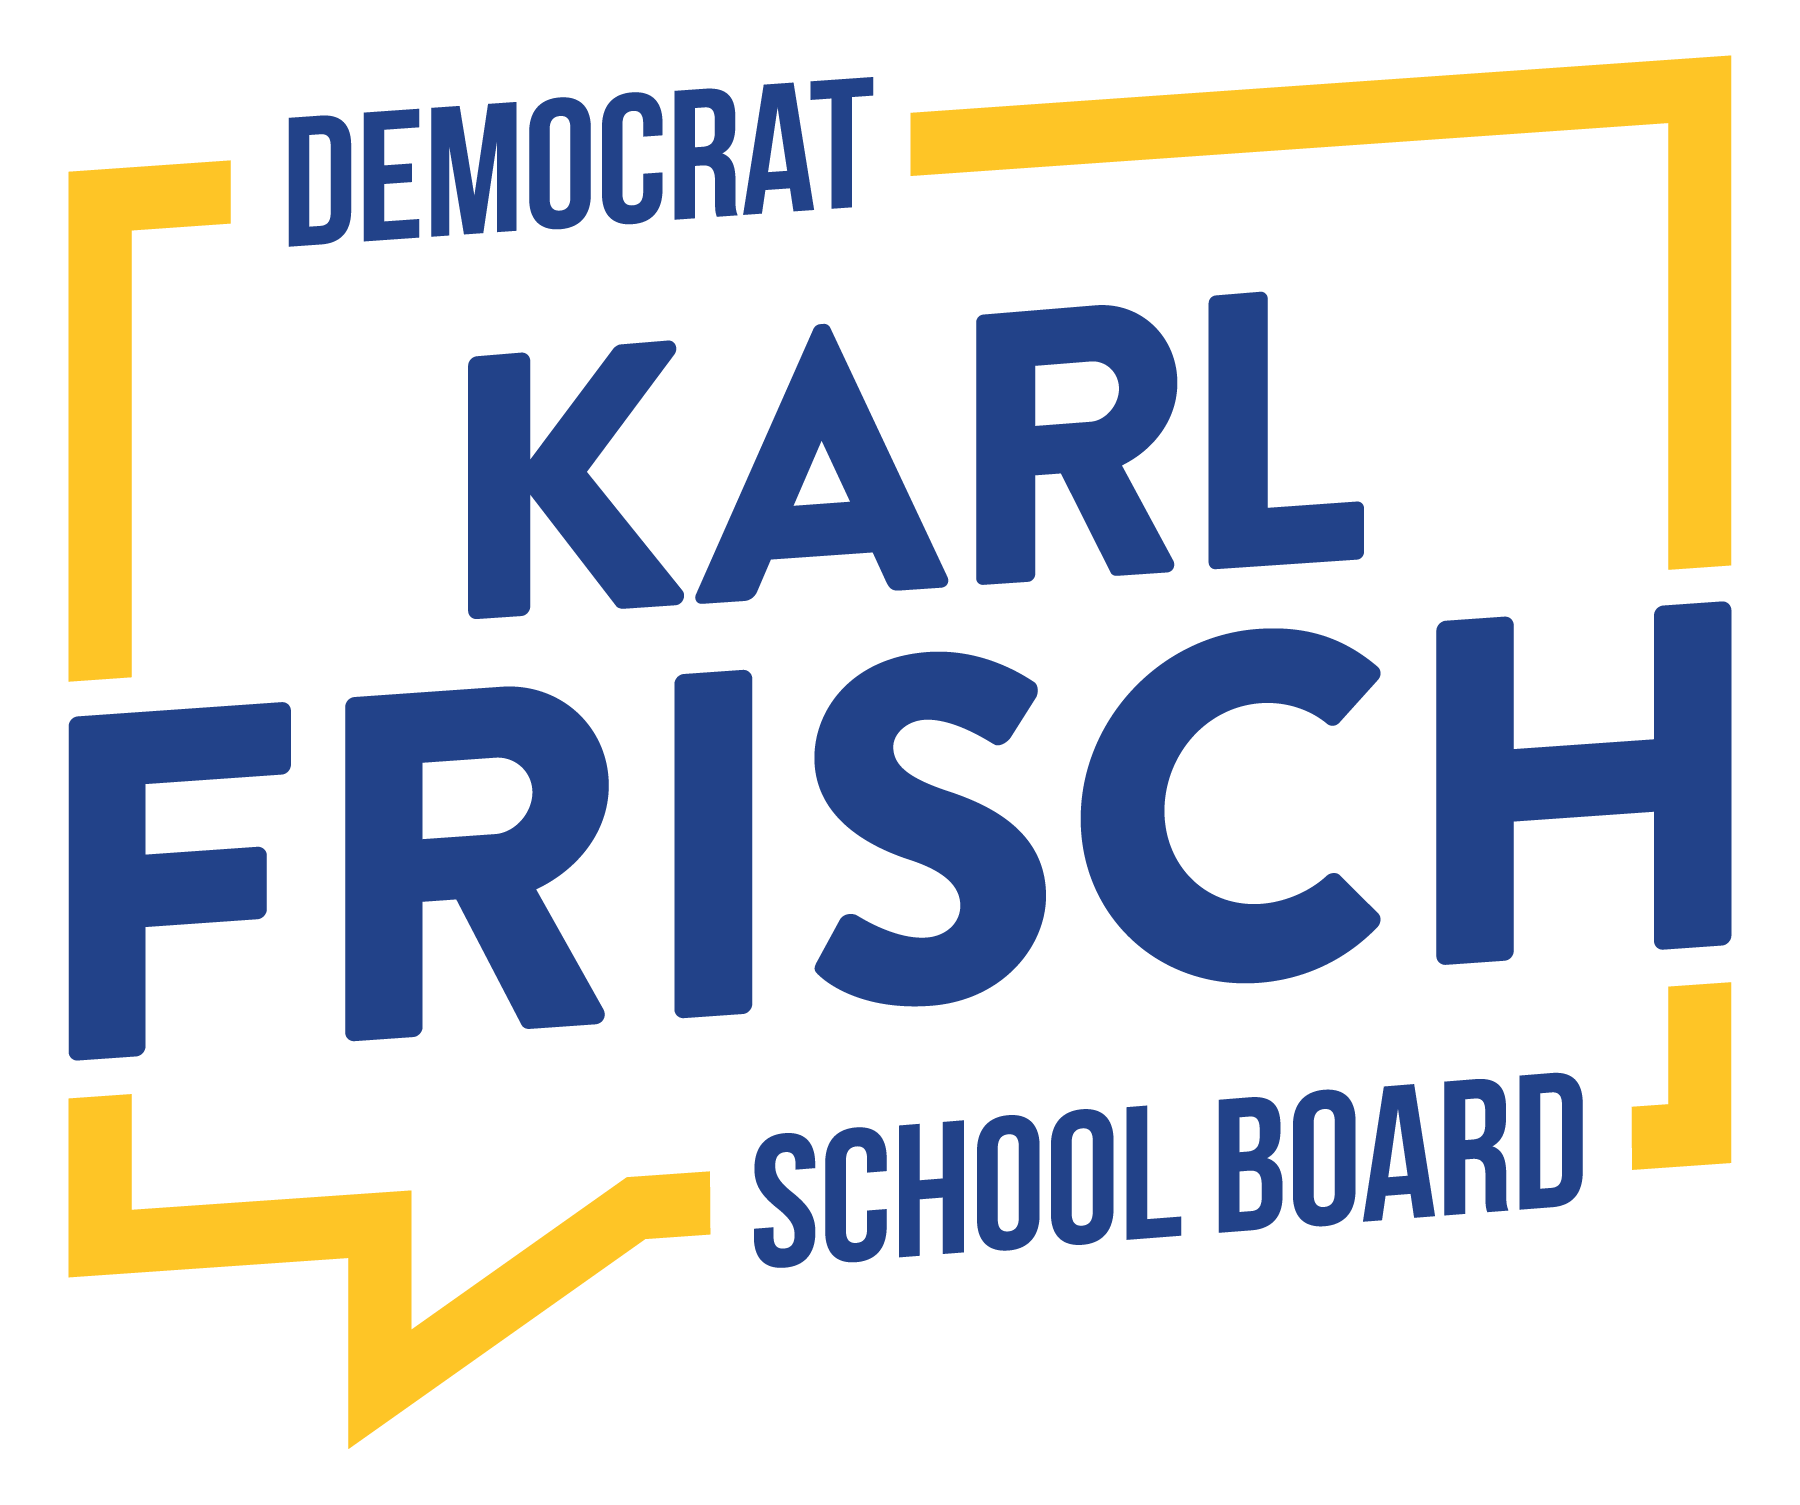 Karl Frisch for School Board